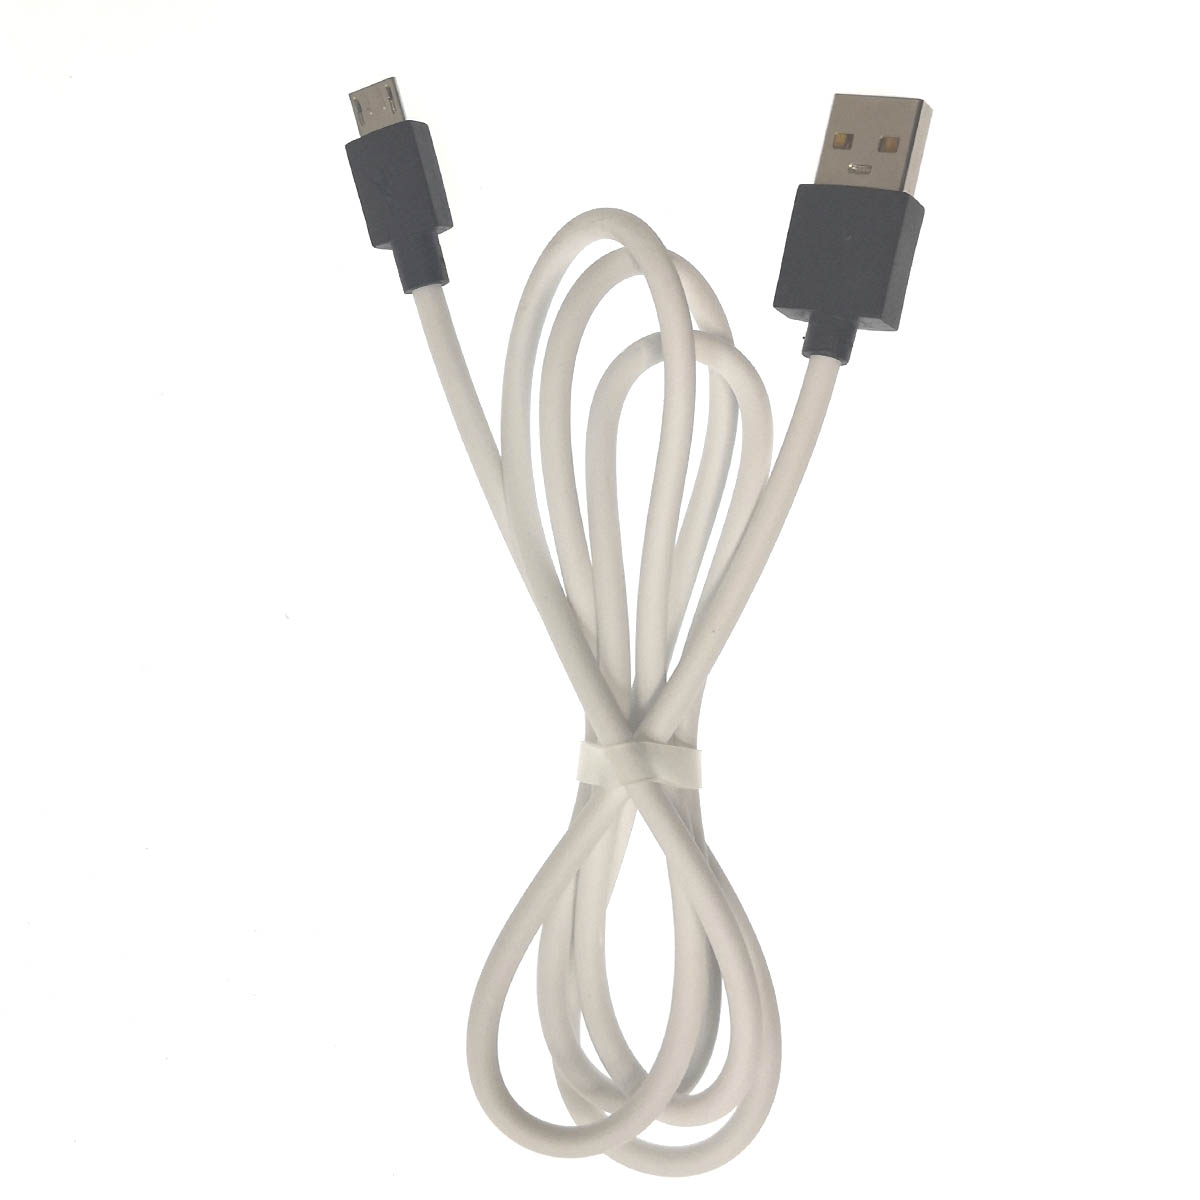 Кабель REALM R5 Micro USB, 3A, QC3.0, длина 1 метр, цвет белый